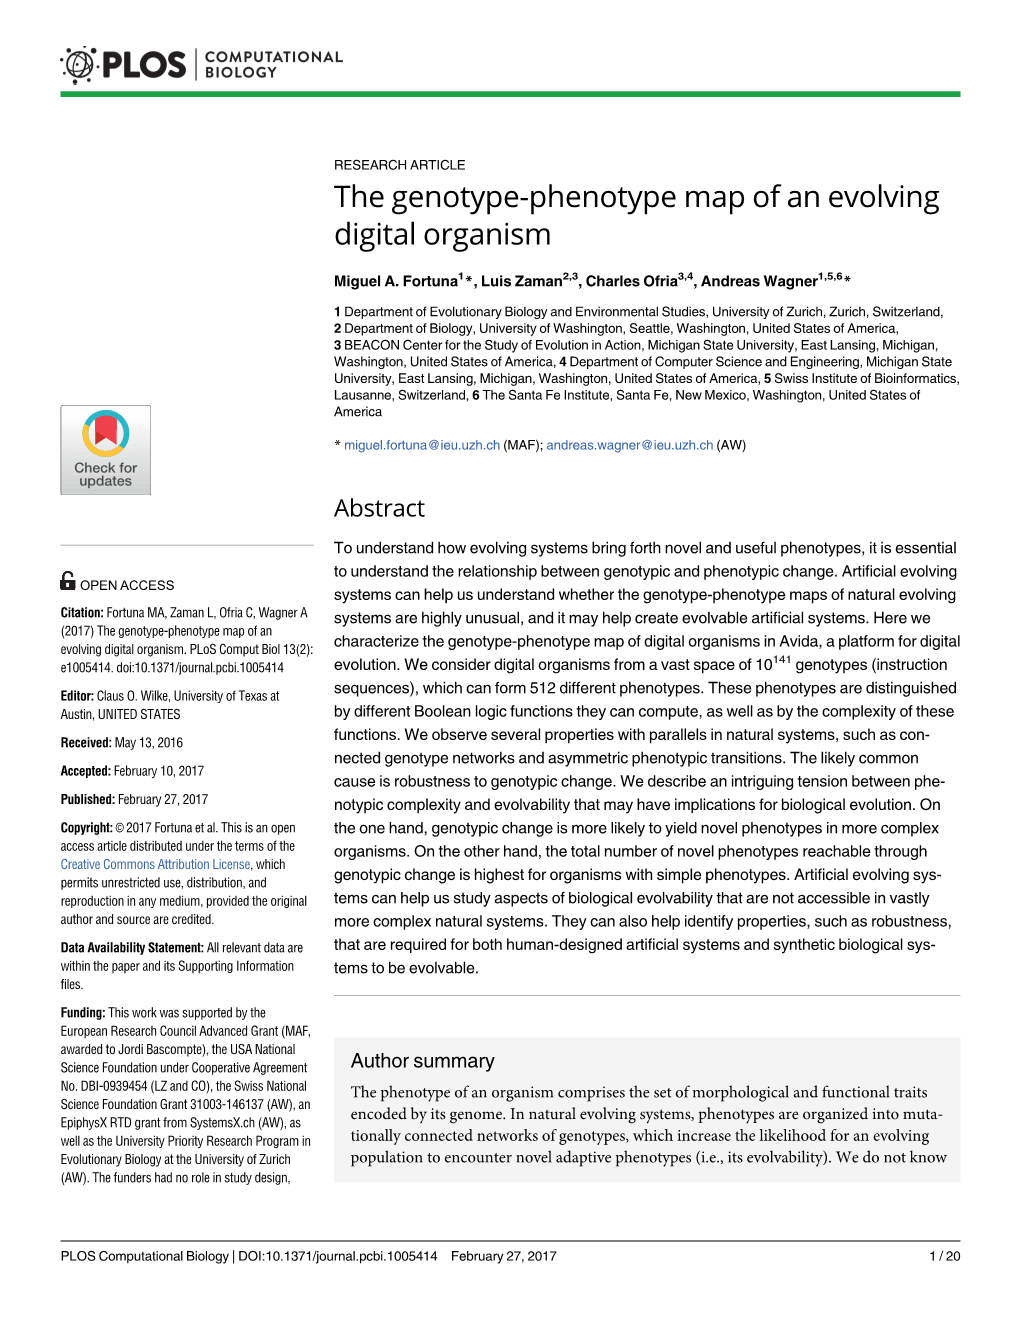 The Genotype-Phenotype Map of an Evolving Digital Organism